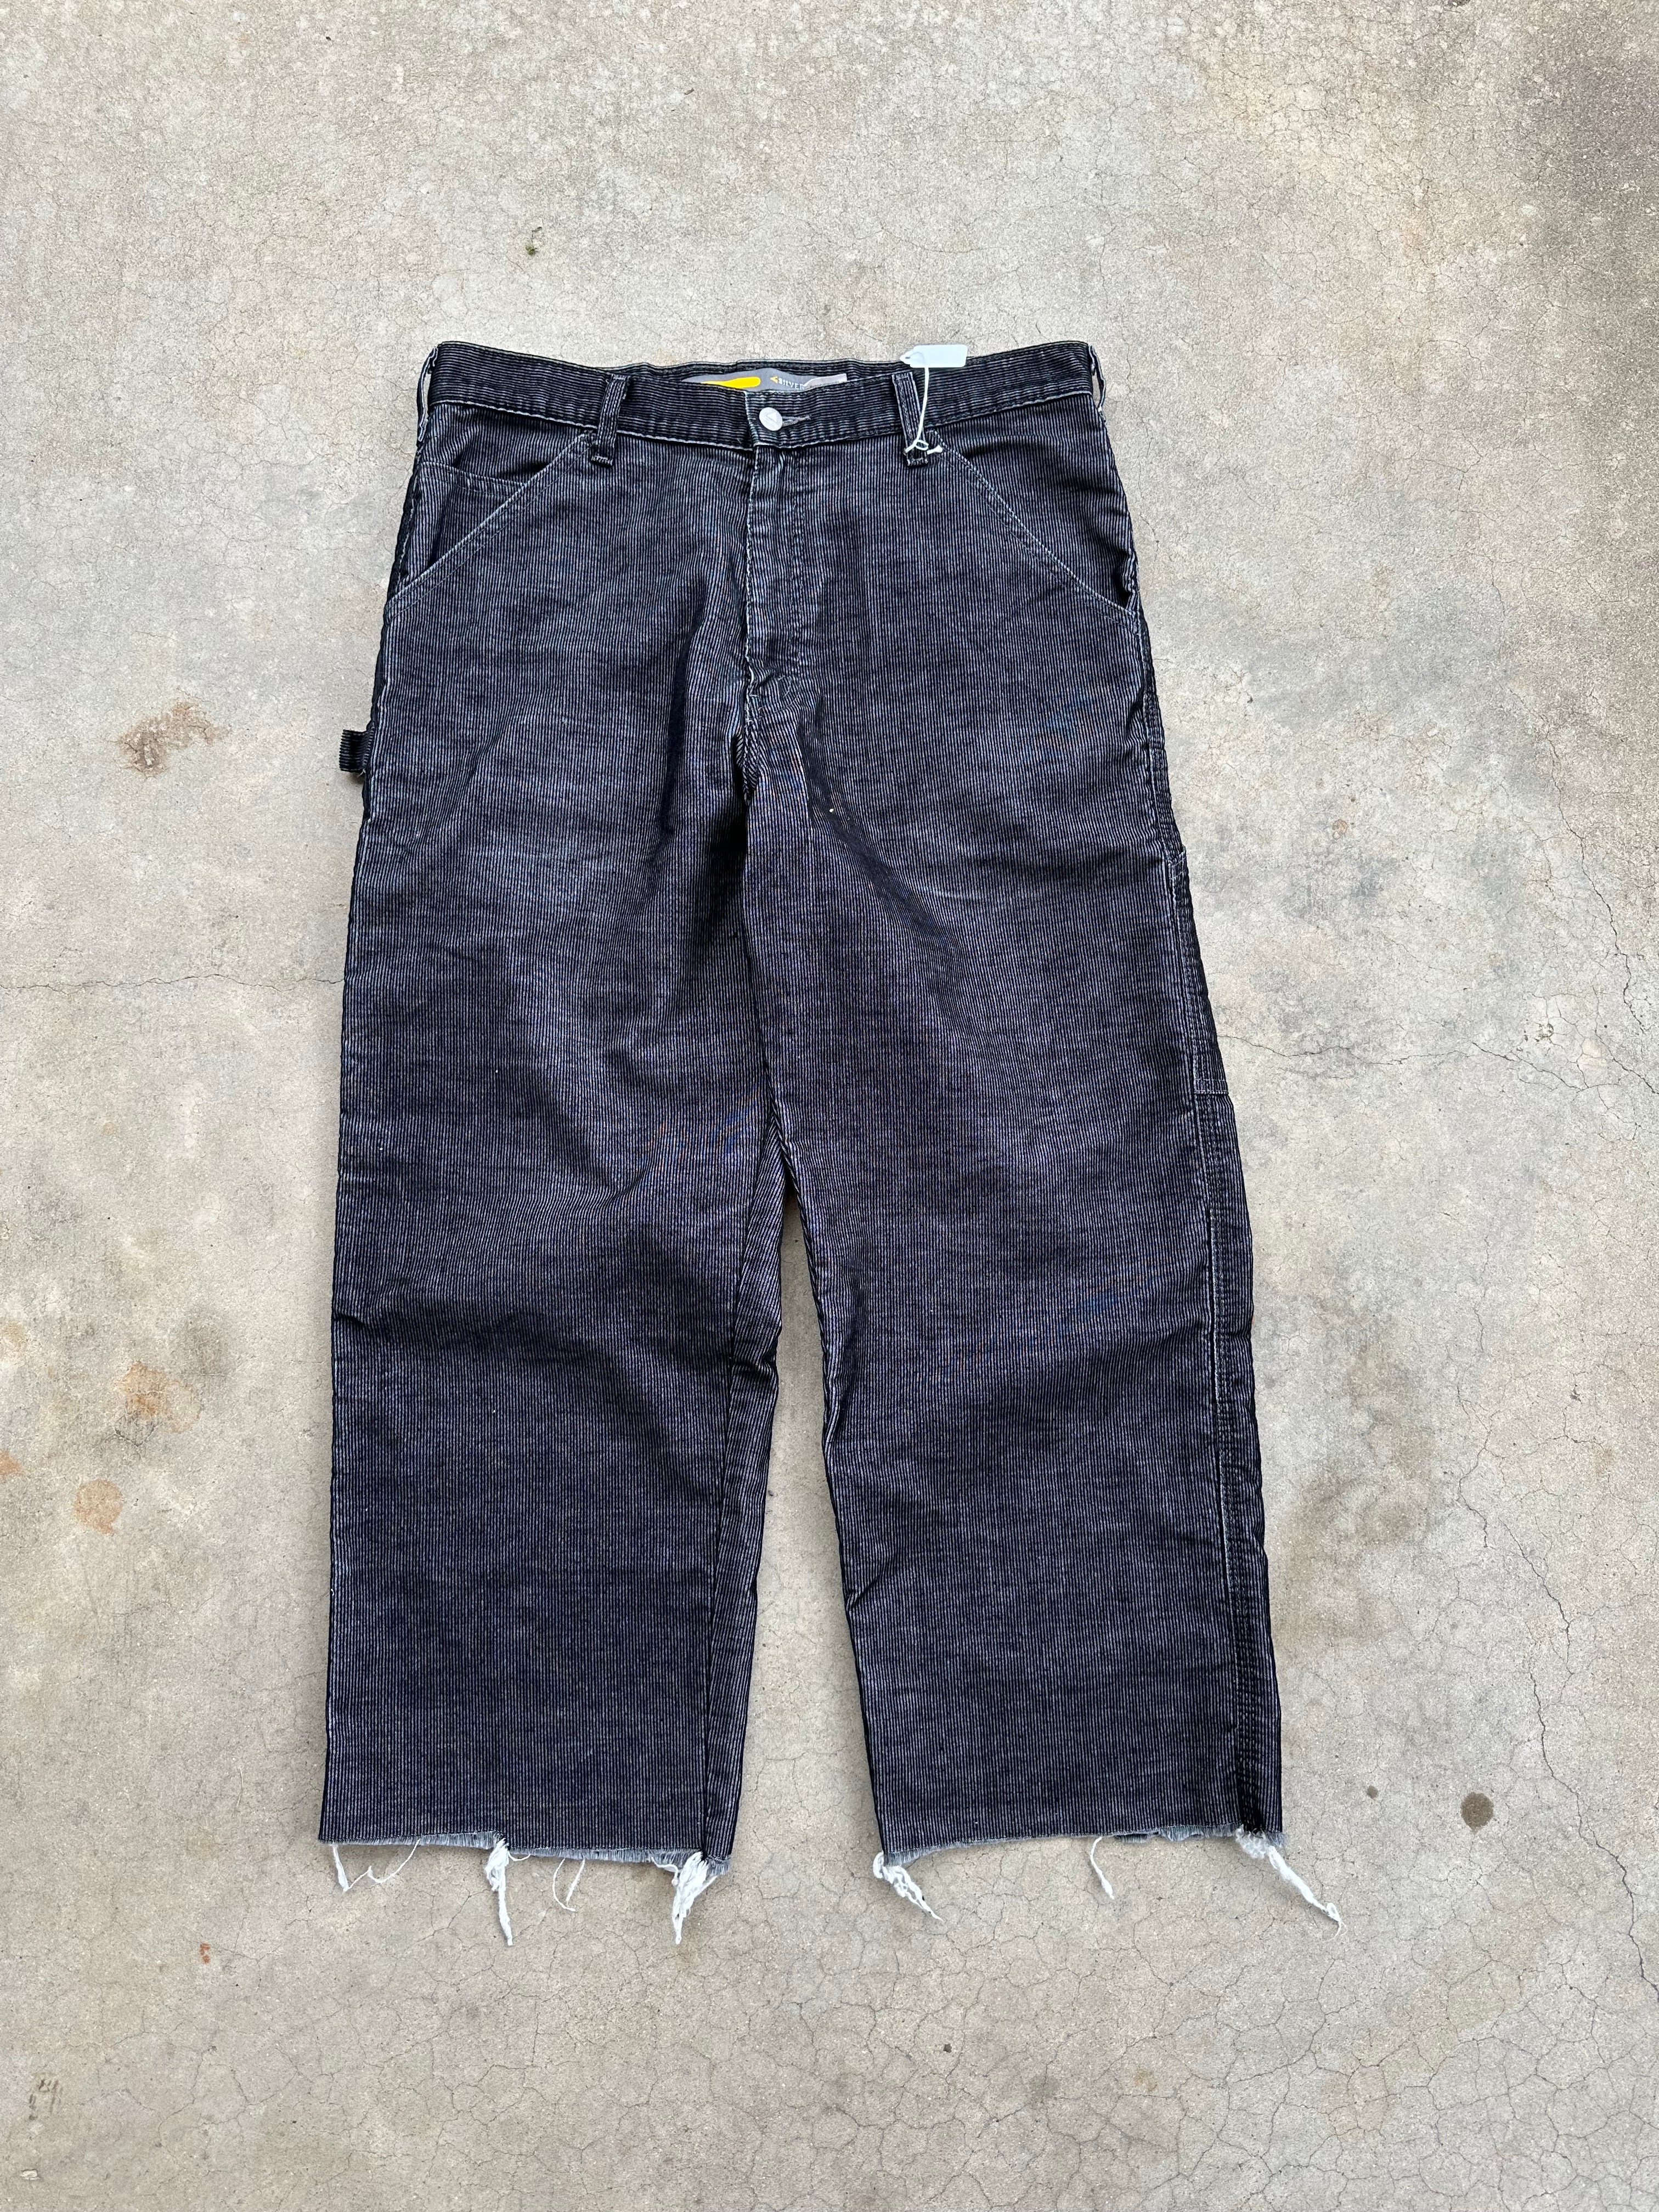 Vintage Levi’s Silvertab Corduroy Carpenter Pants (34"x26.5")